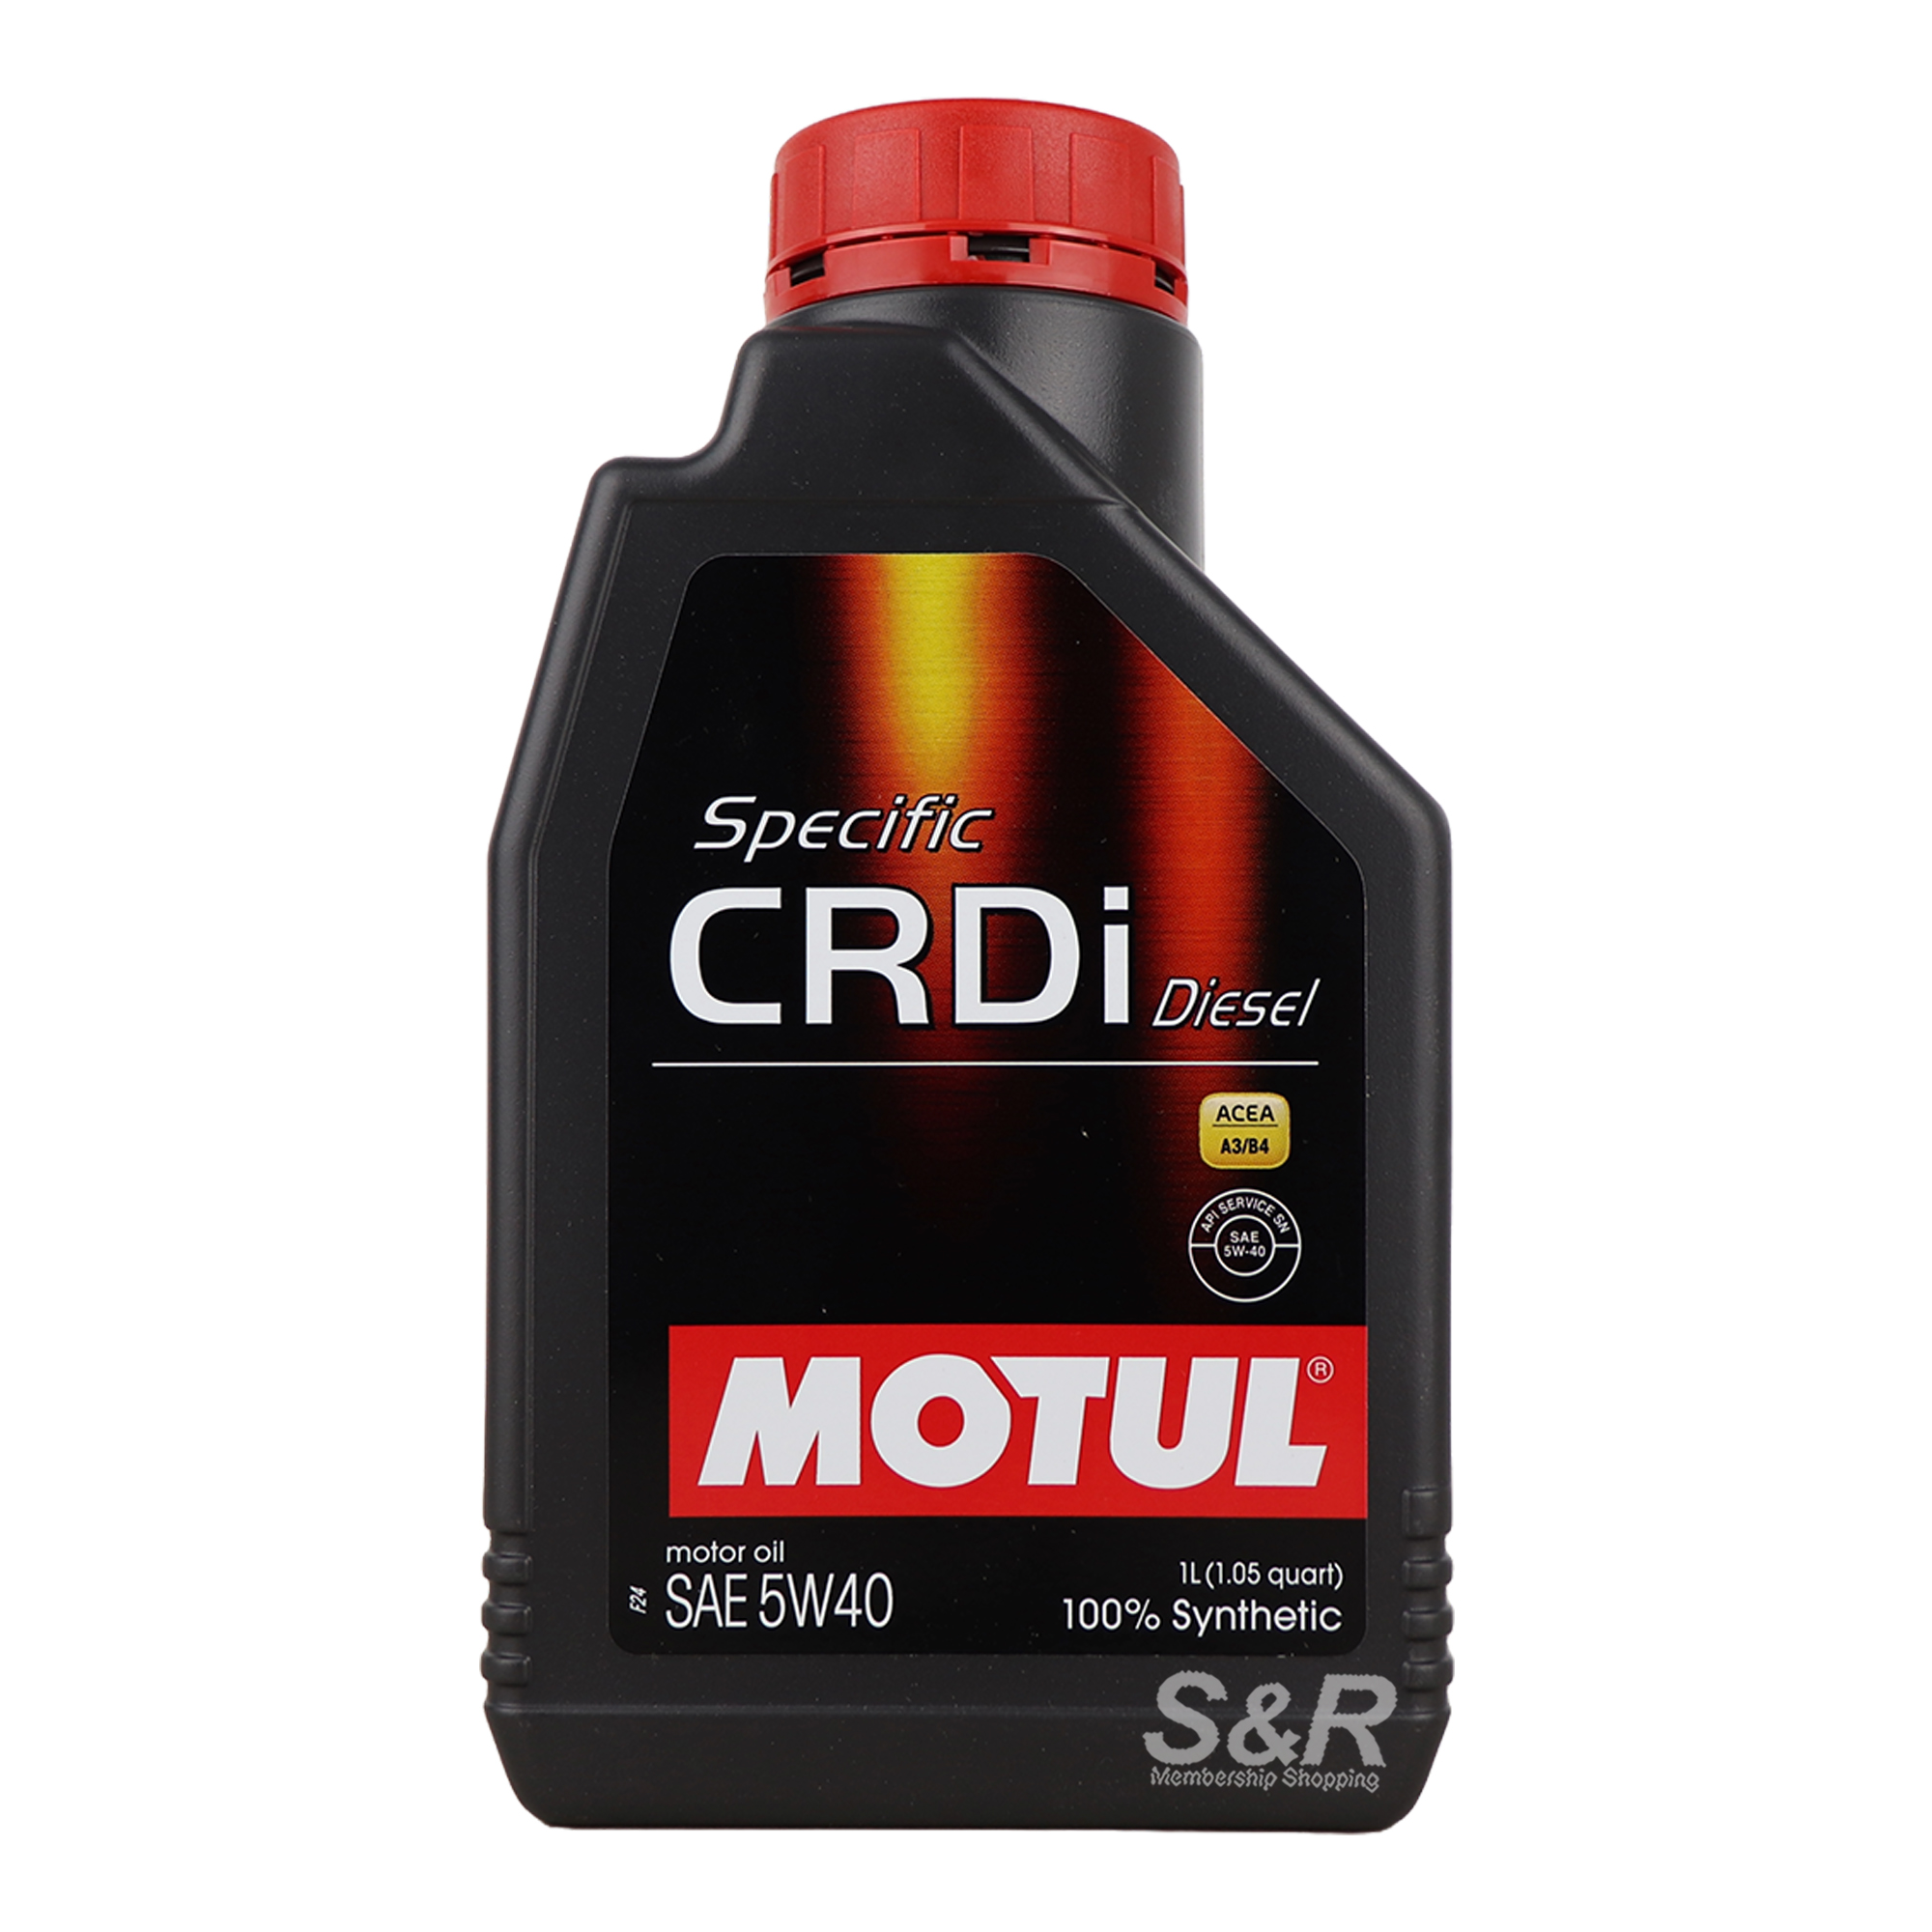 Motul CRDI Diesel Motor Oil 1L